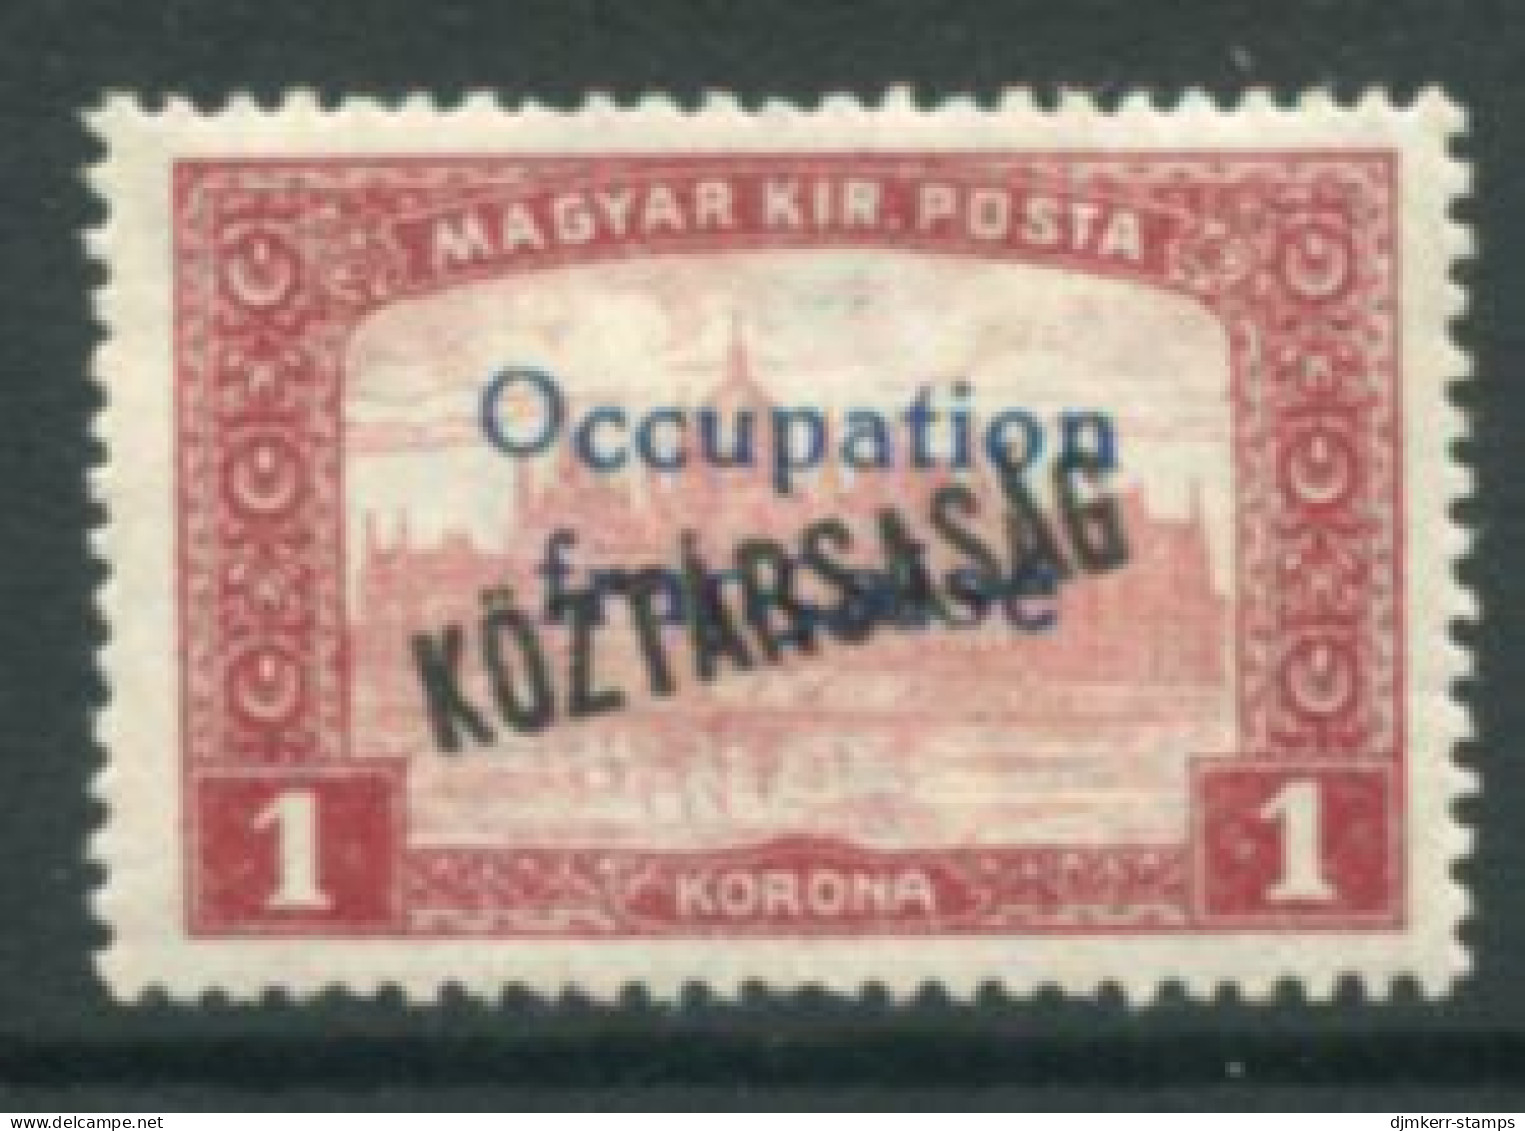 ARAD (French Occupation) 1919 Overprint On Parliament KÖZTARSASAG 1 Kr  LHM/ *.  Michel 38 - Unclassified